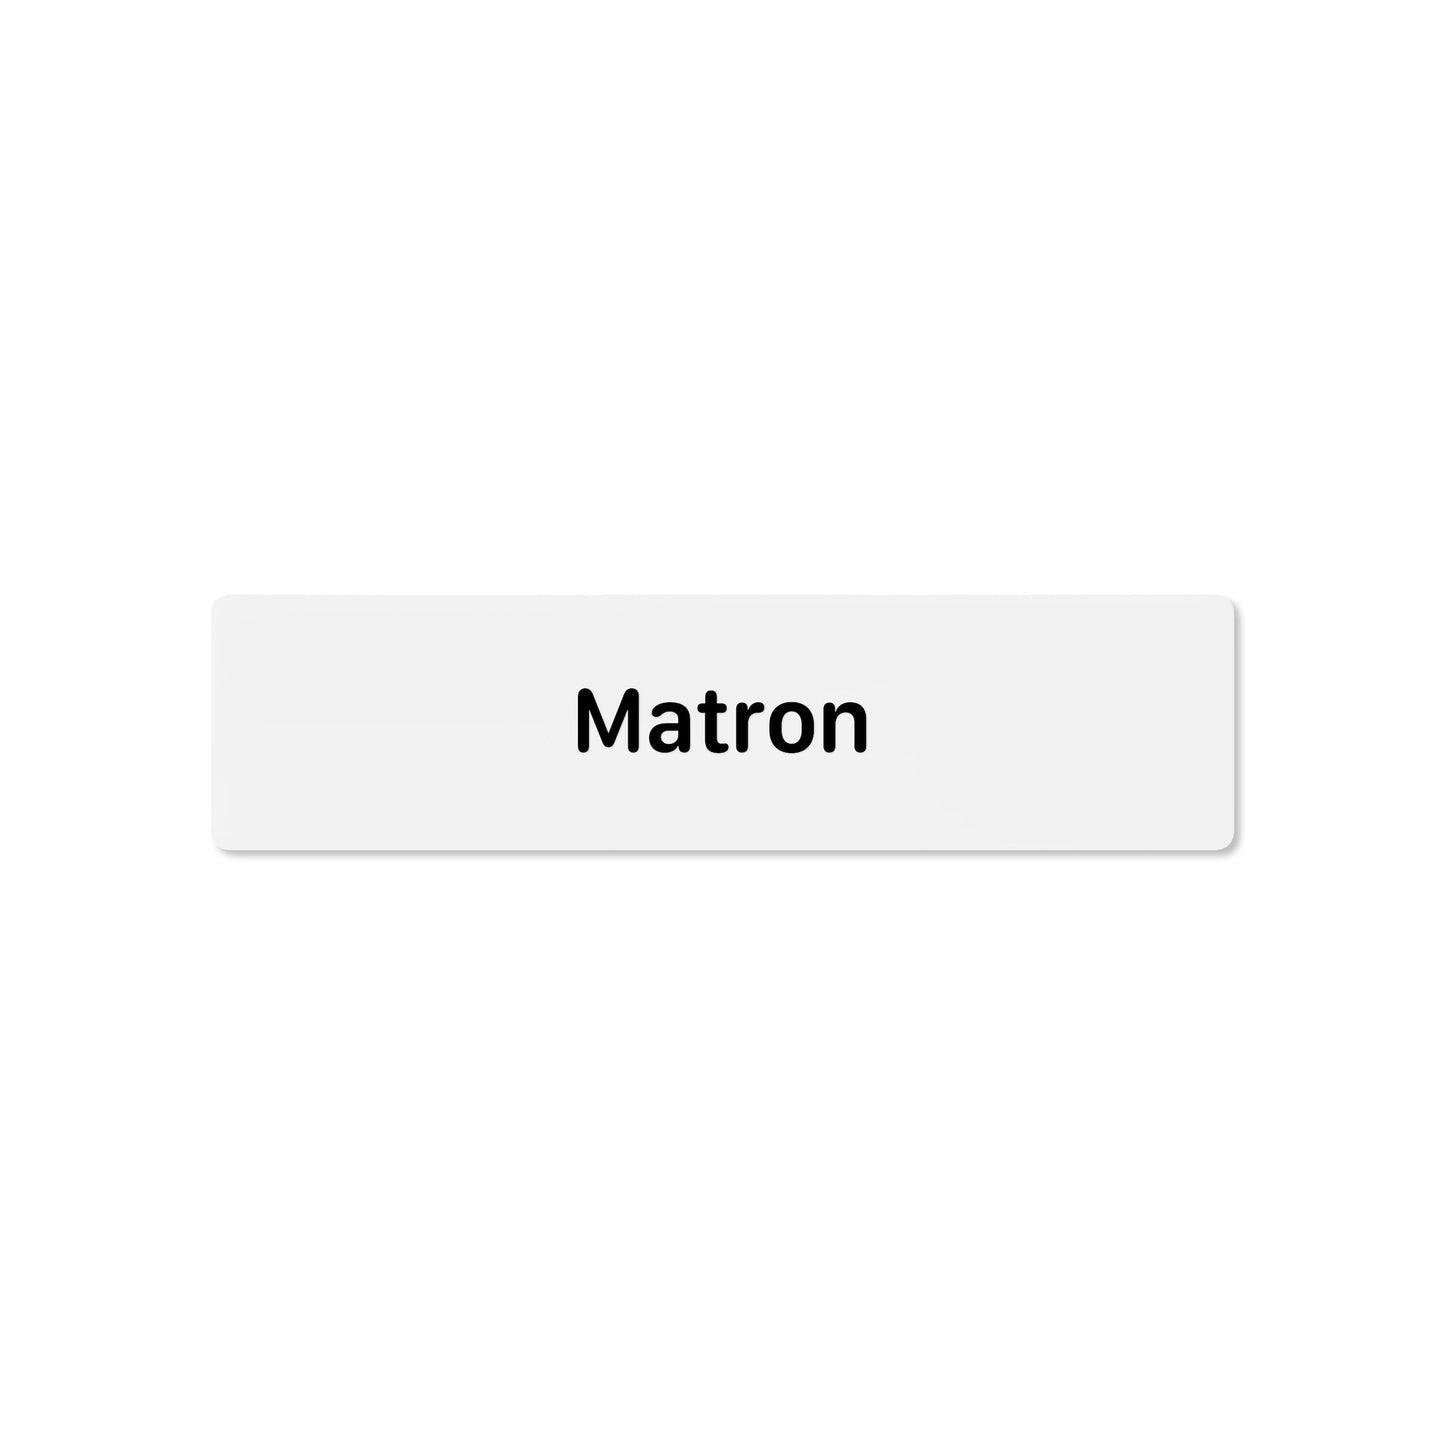 Matron